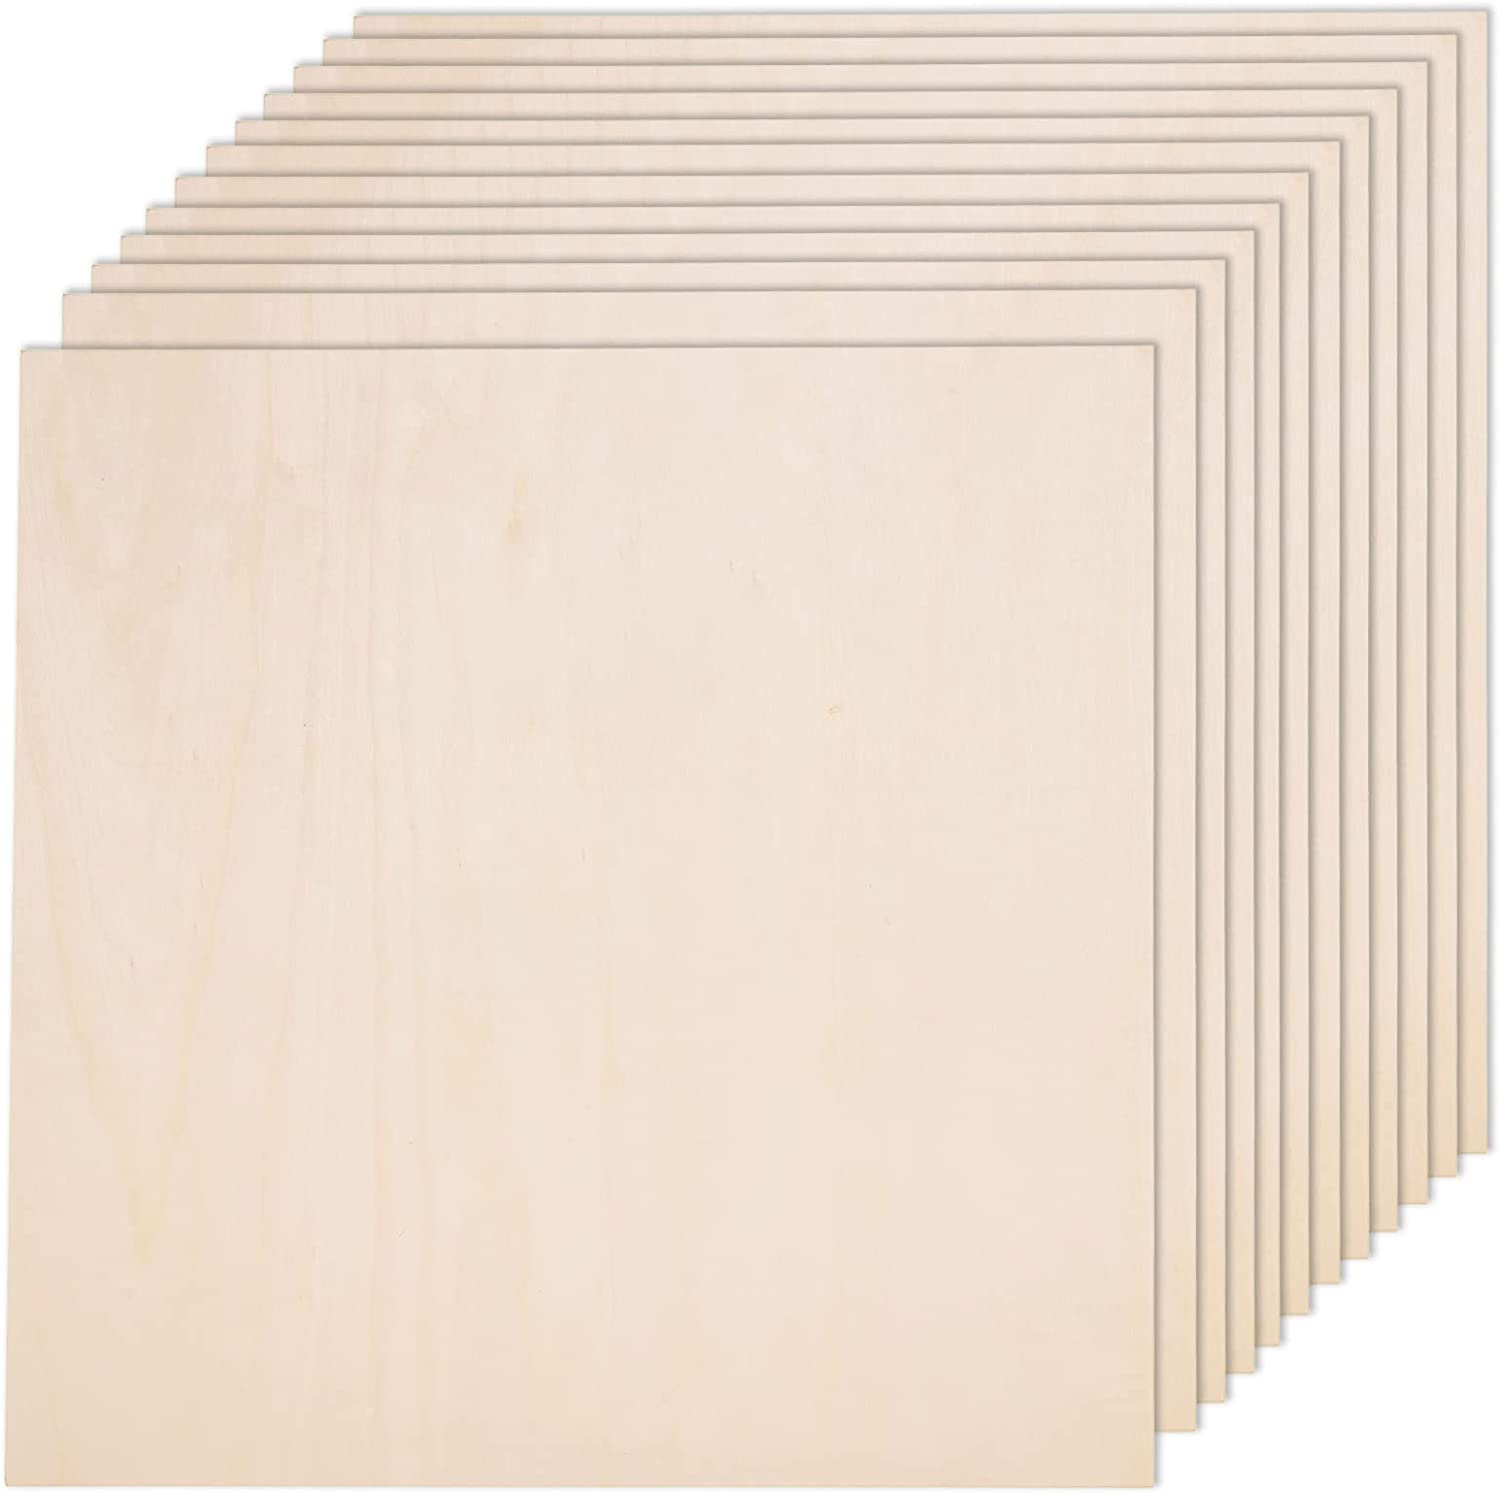 Plain Basswood Sheet, 0.25 thick, 4x12 inches long - BULK